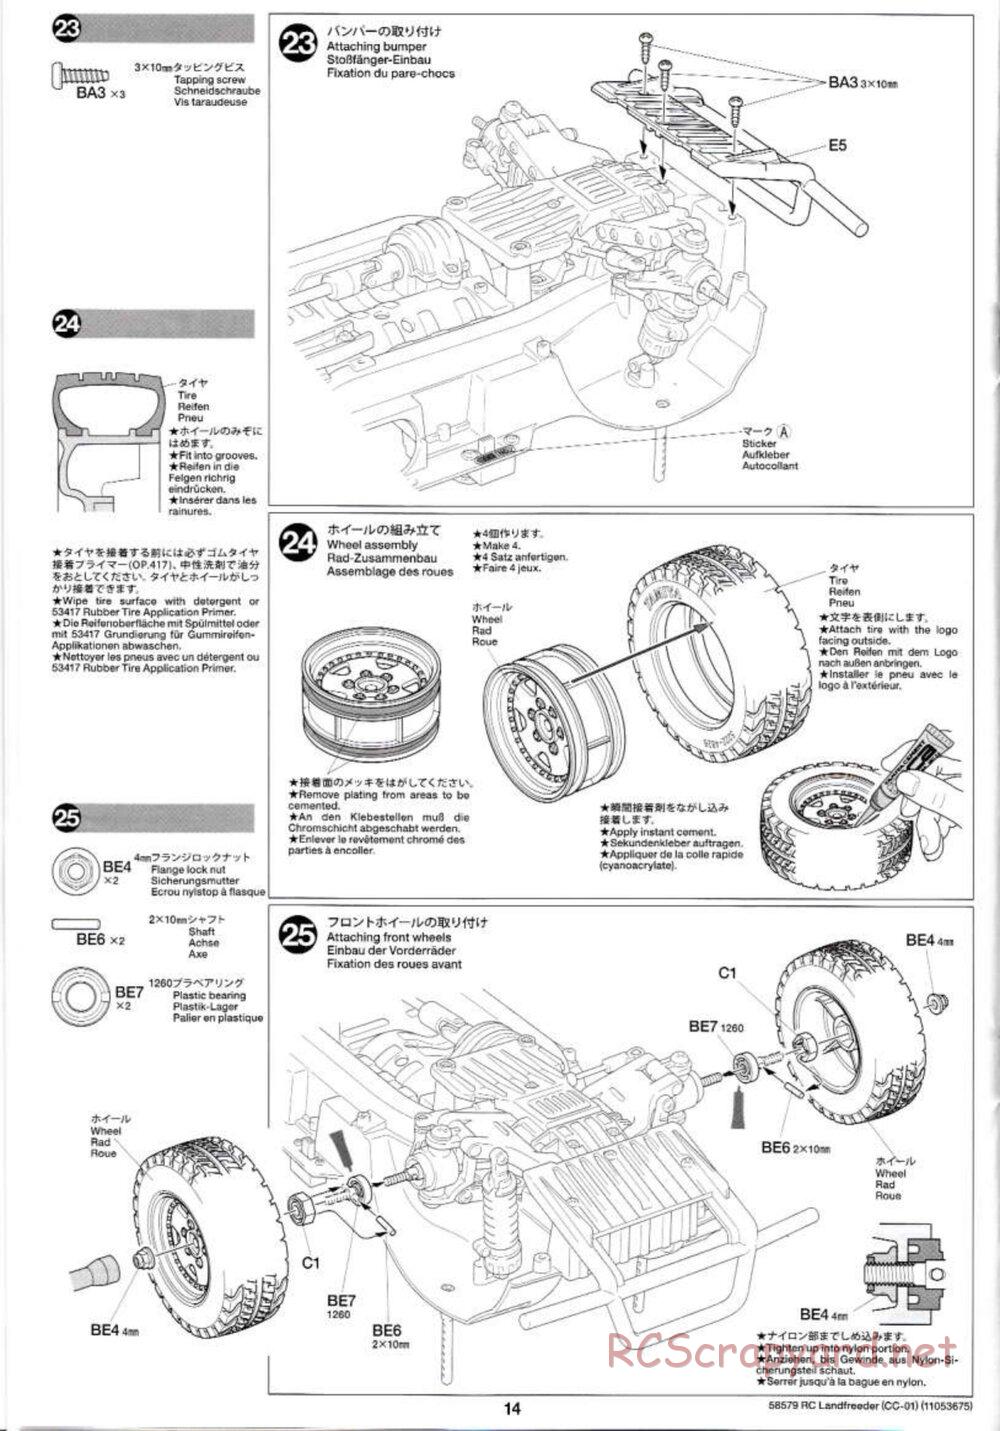 Tamiya - LandFreeder - CC-01 Chassis - Manual - Page 14